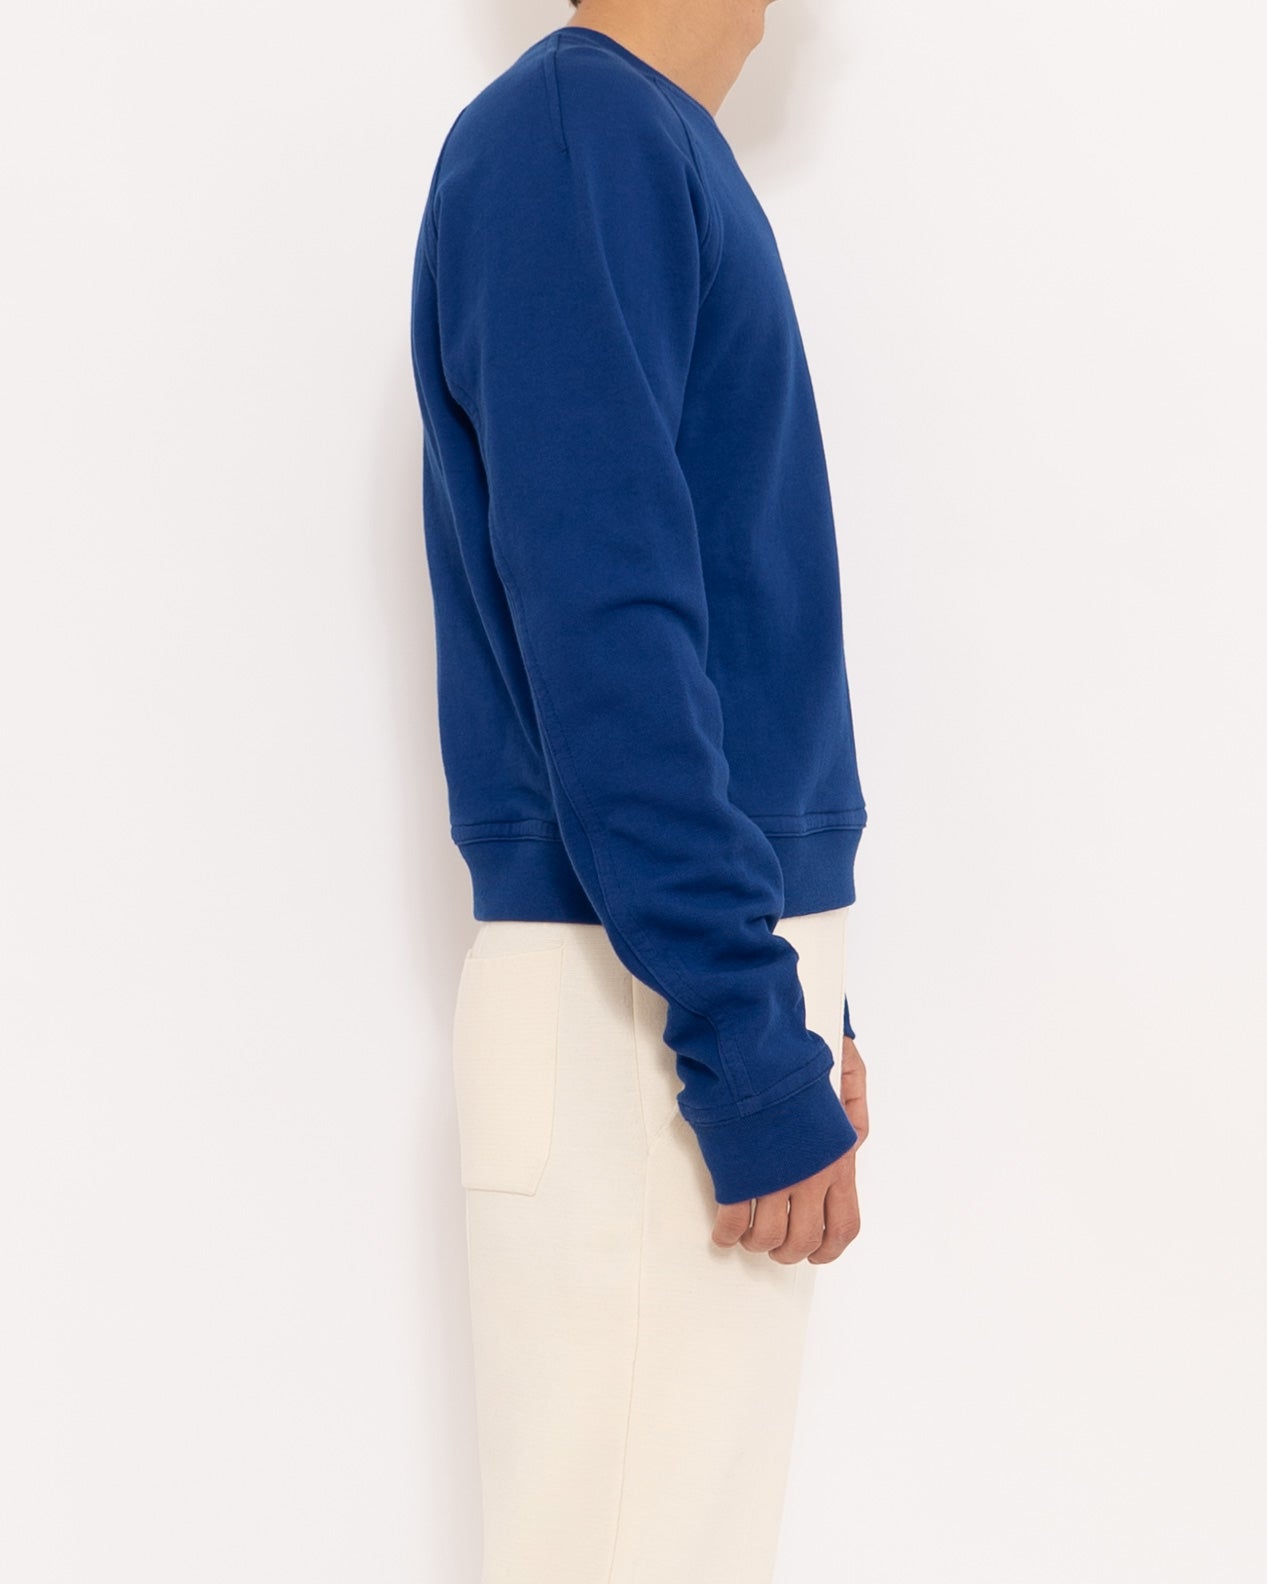 SS17 Indigo Perth Sweater Sample